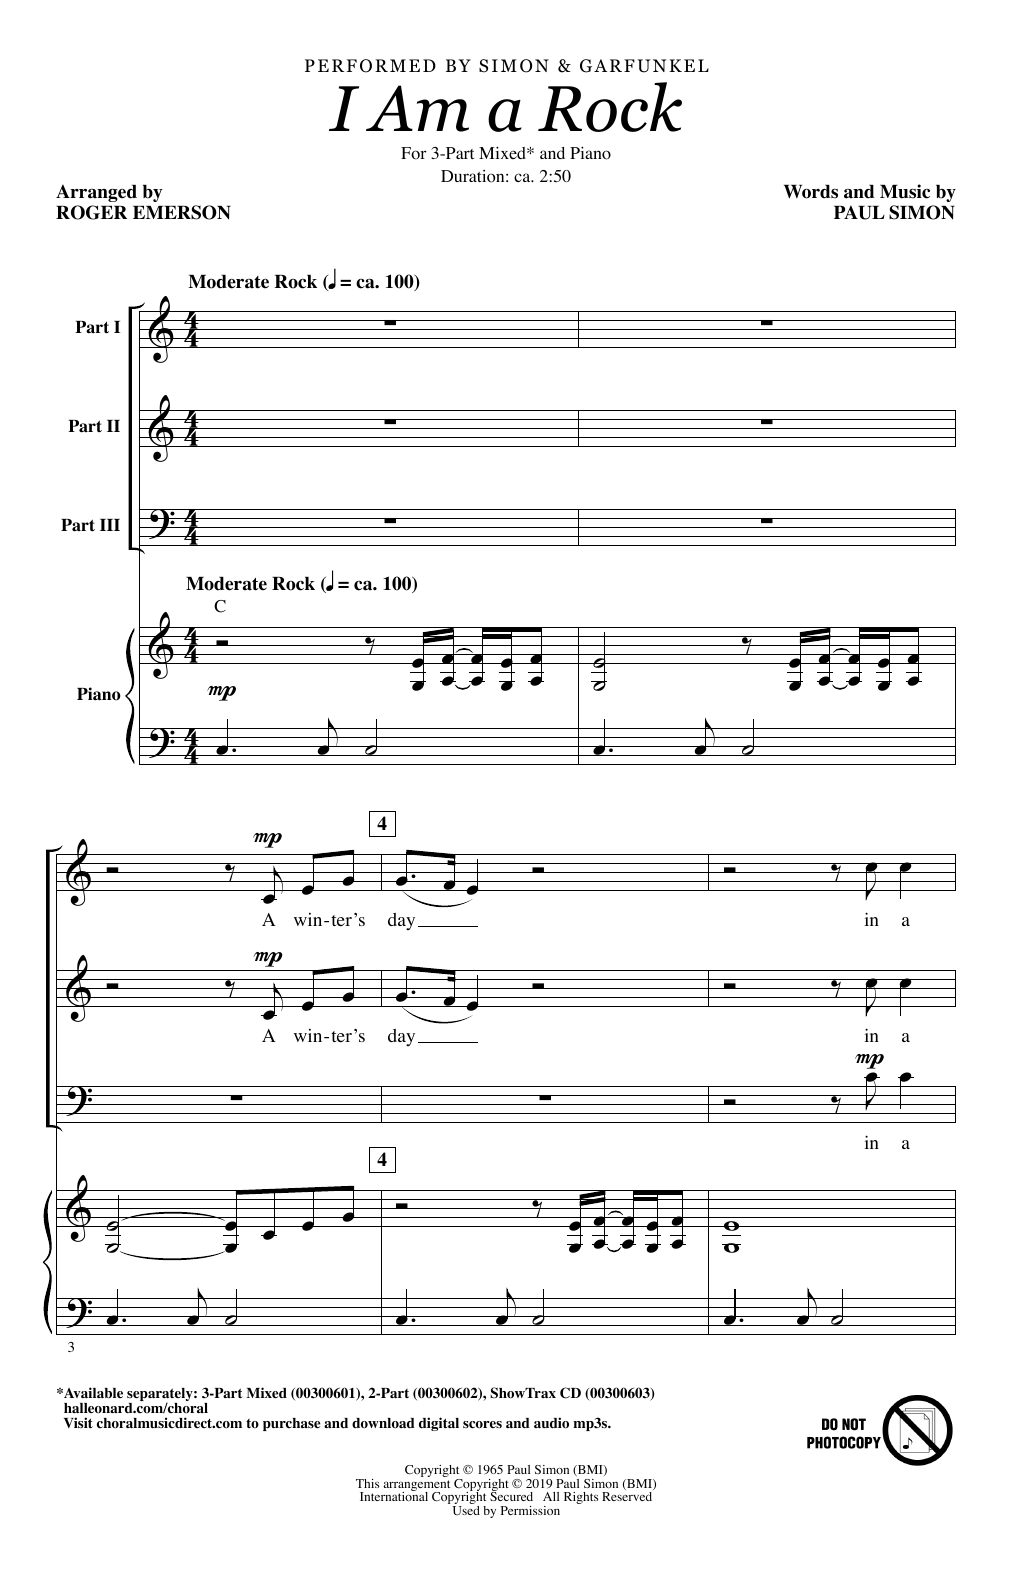 Simon & Garfunkel I Am A Rock (arr. Roger Emerson) sheet music notes and chords arranged for 2-Part Choir